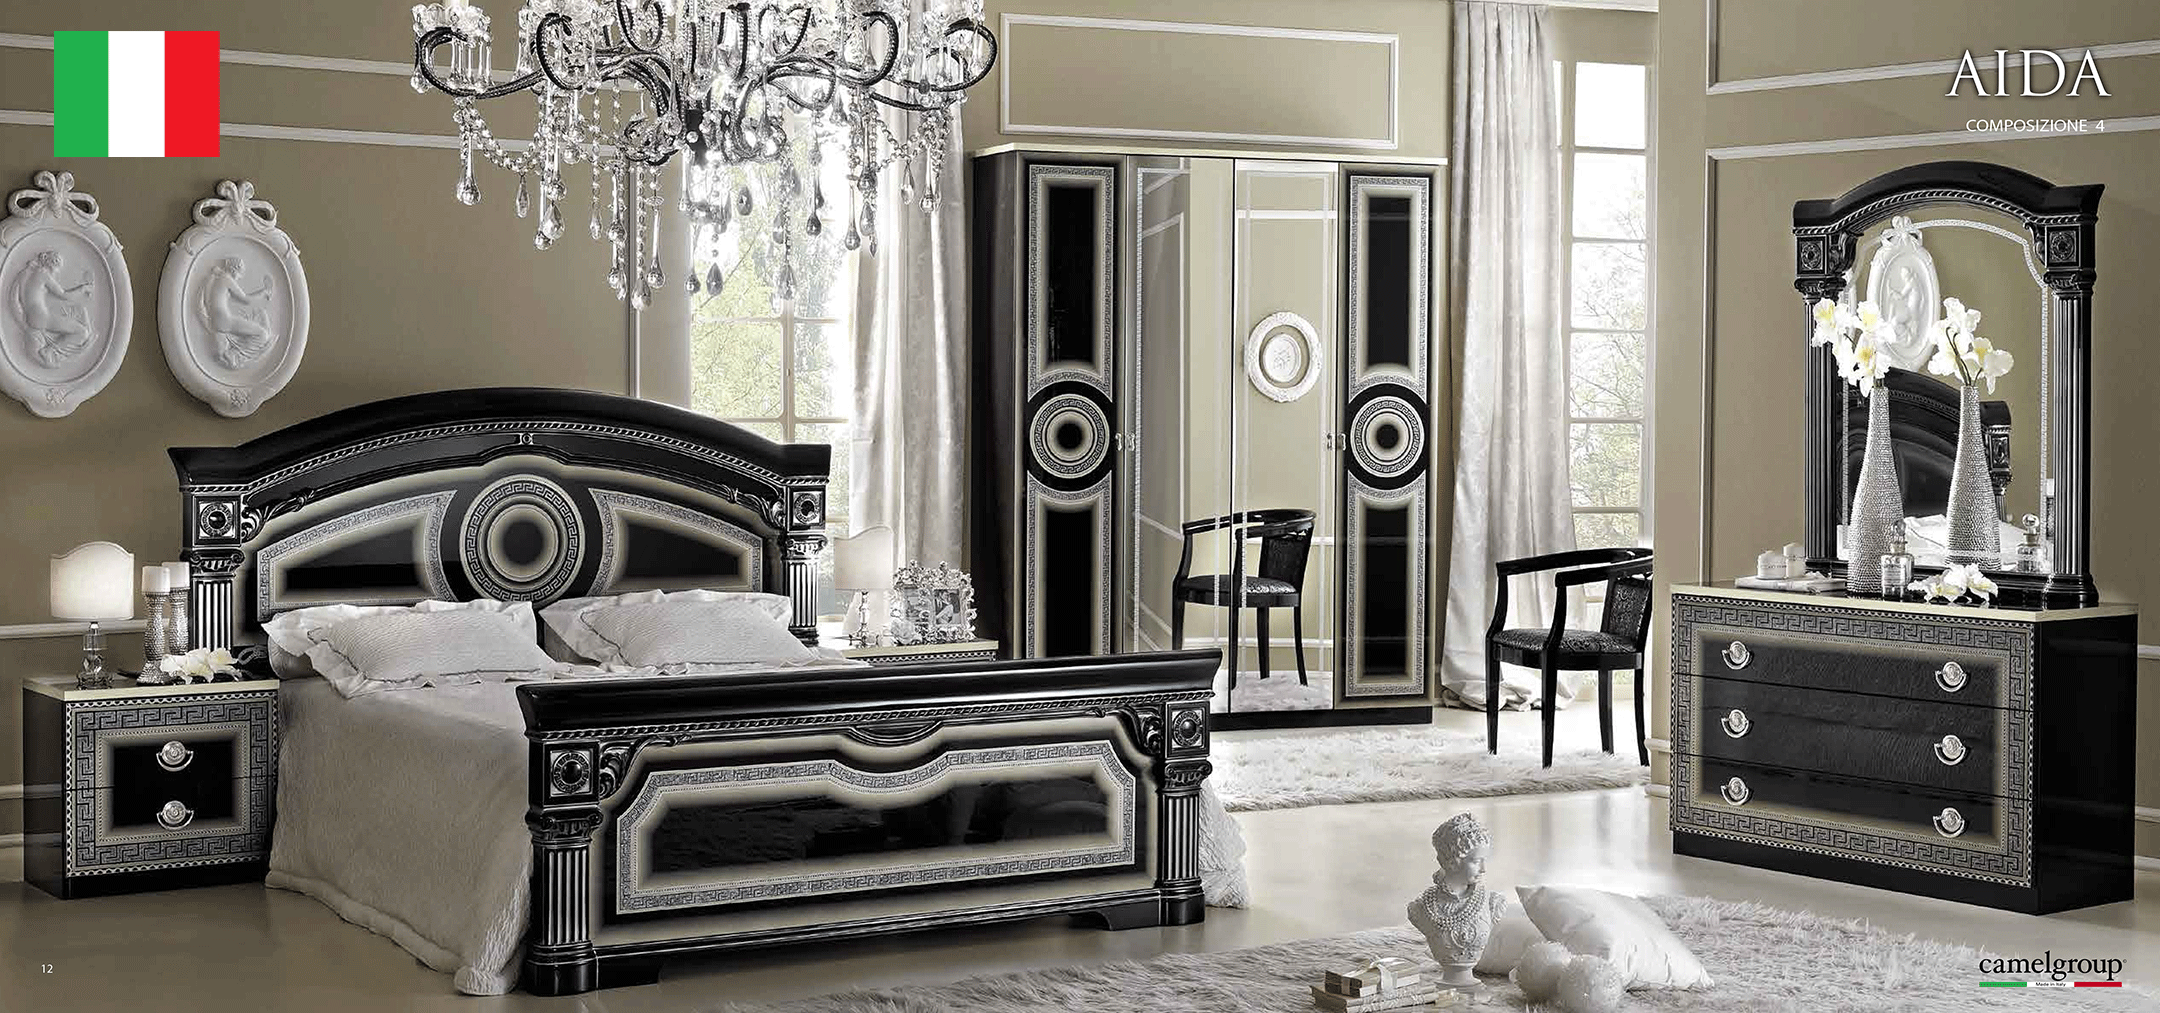 Wallunits Hallway Console tables and Mirrors Aida Bedroom Black/Silver, Camelgroup Italy